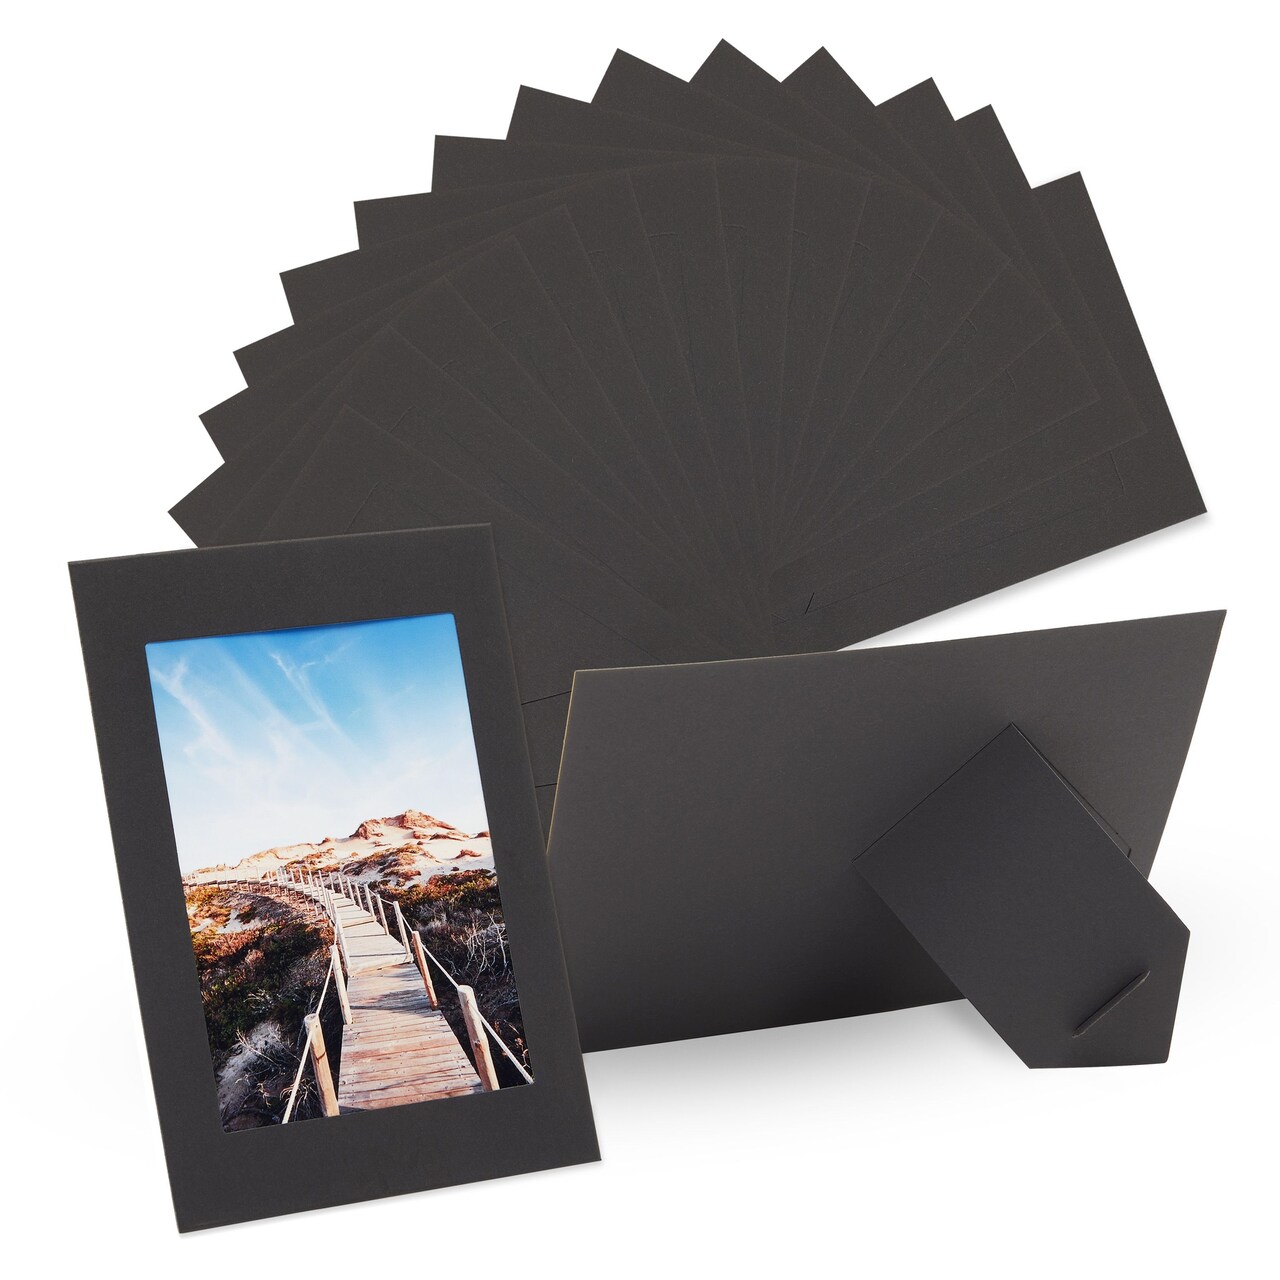 50 Pack Black 4x6 Cardboard Photo Frames with Holder, Paper